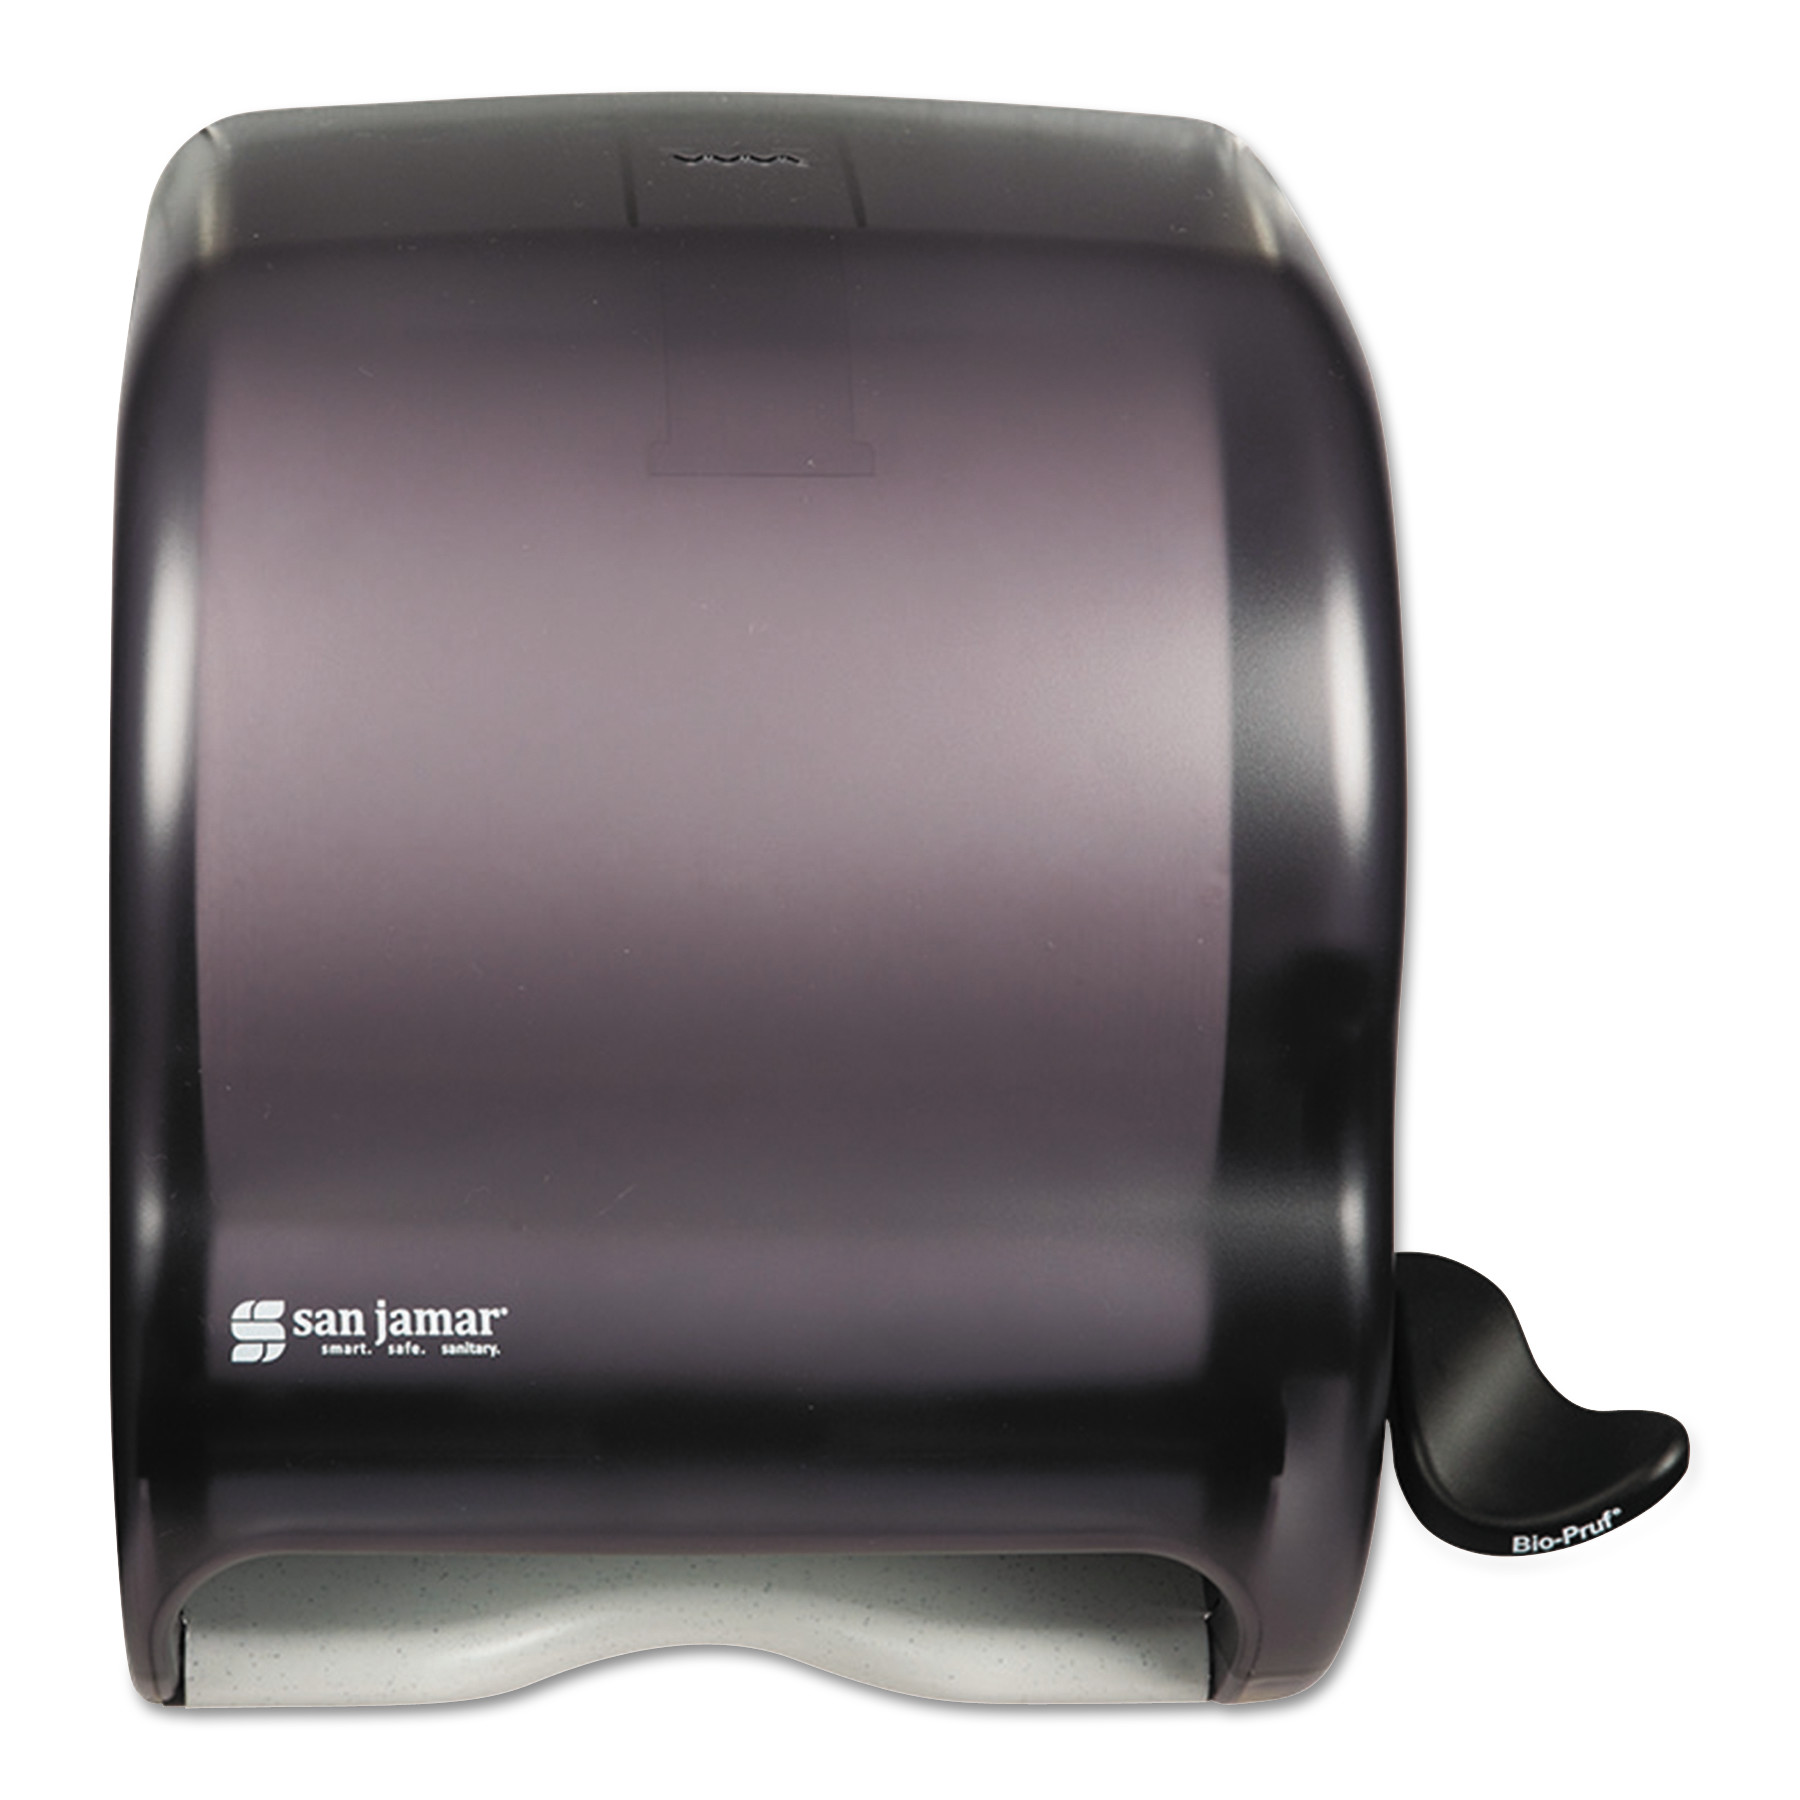 San Jamar Element Lever Roll Towel Dispenser - Classic, Black, 12.5 x 8.5 x 12.75